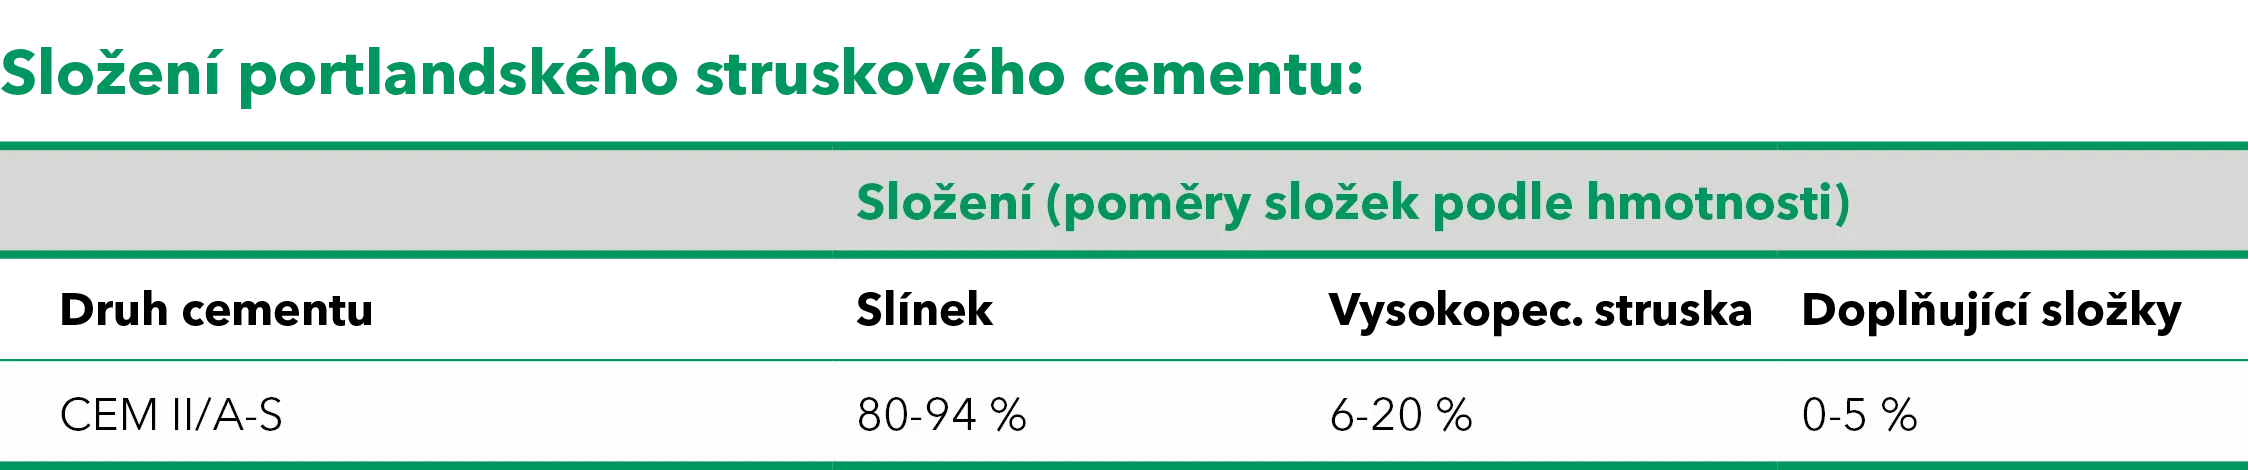 struskovy_cement.png